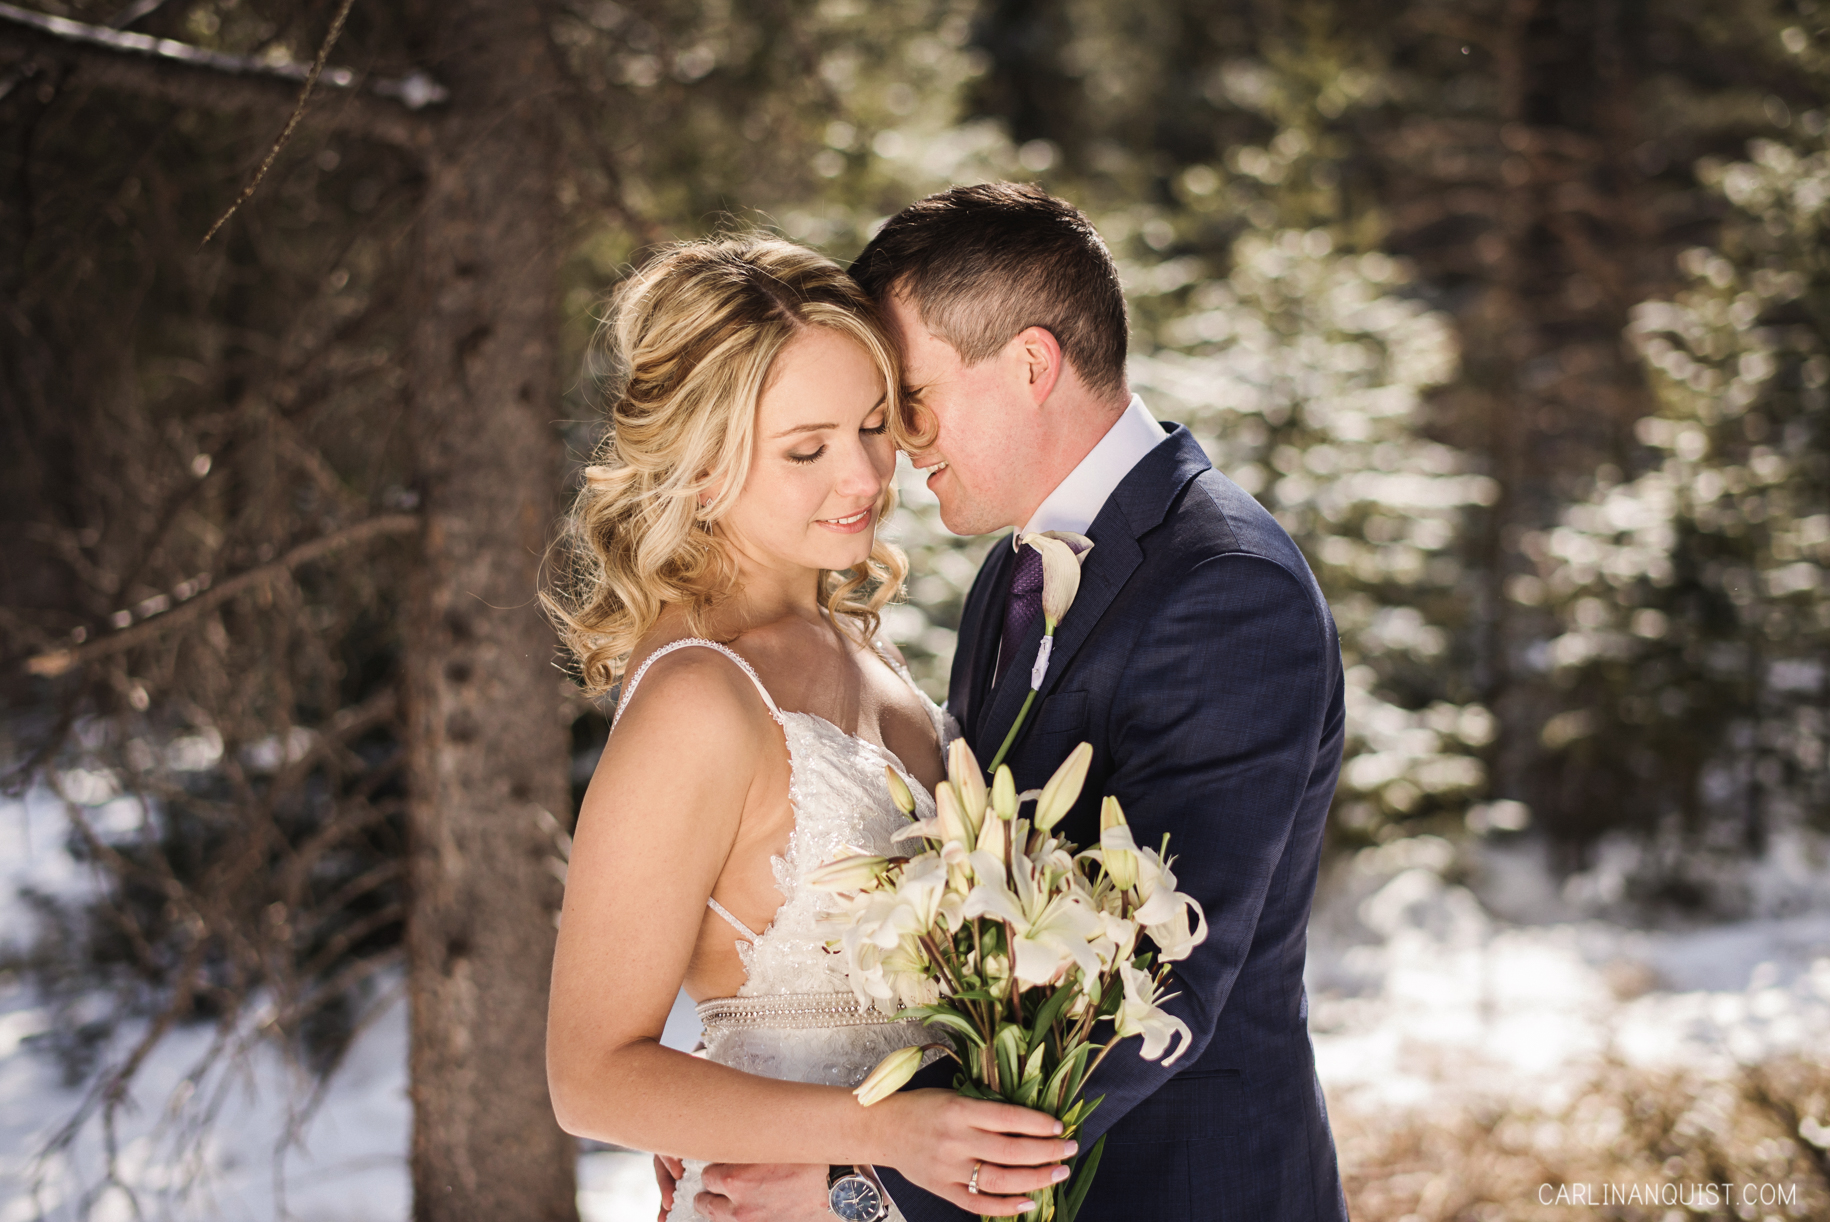 Winter Wedding Portraits in Banff National Park